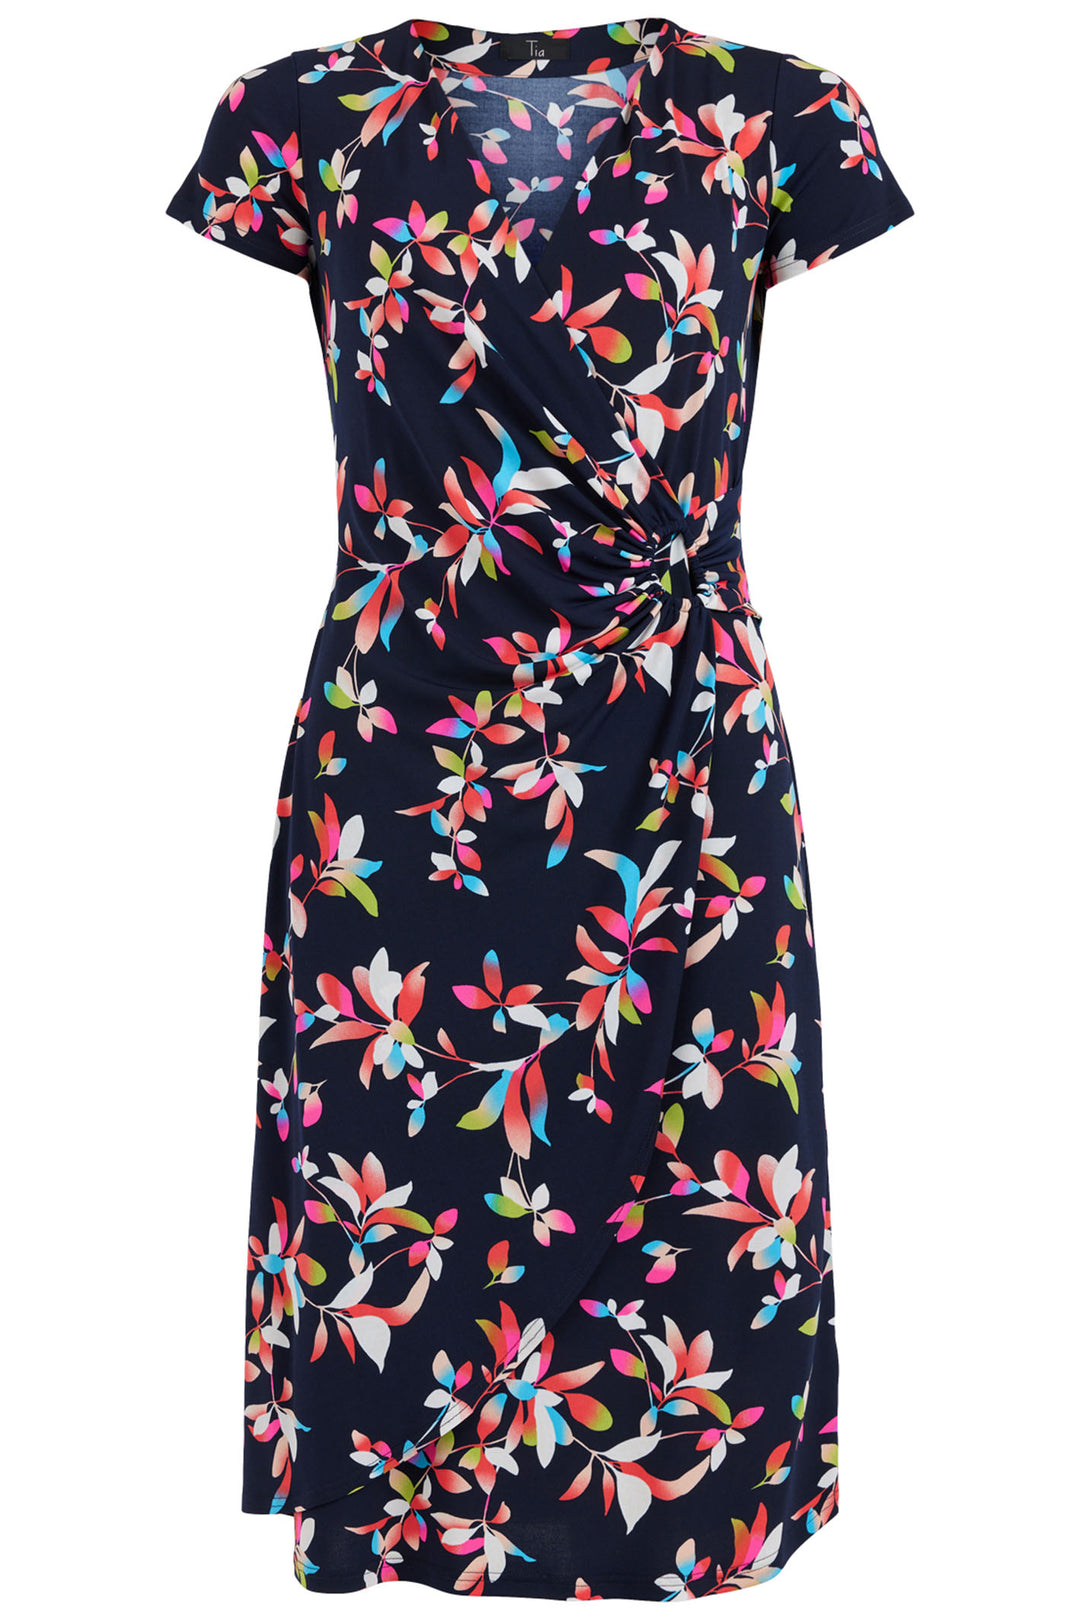 Tia London 78774 46 Navy Floral Print Wrap Style Dress - Experience Boutique